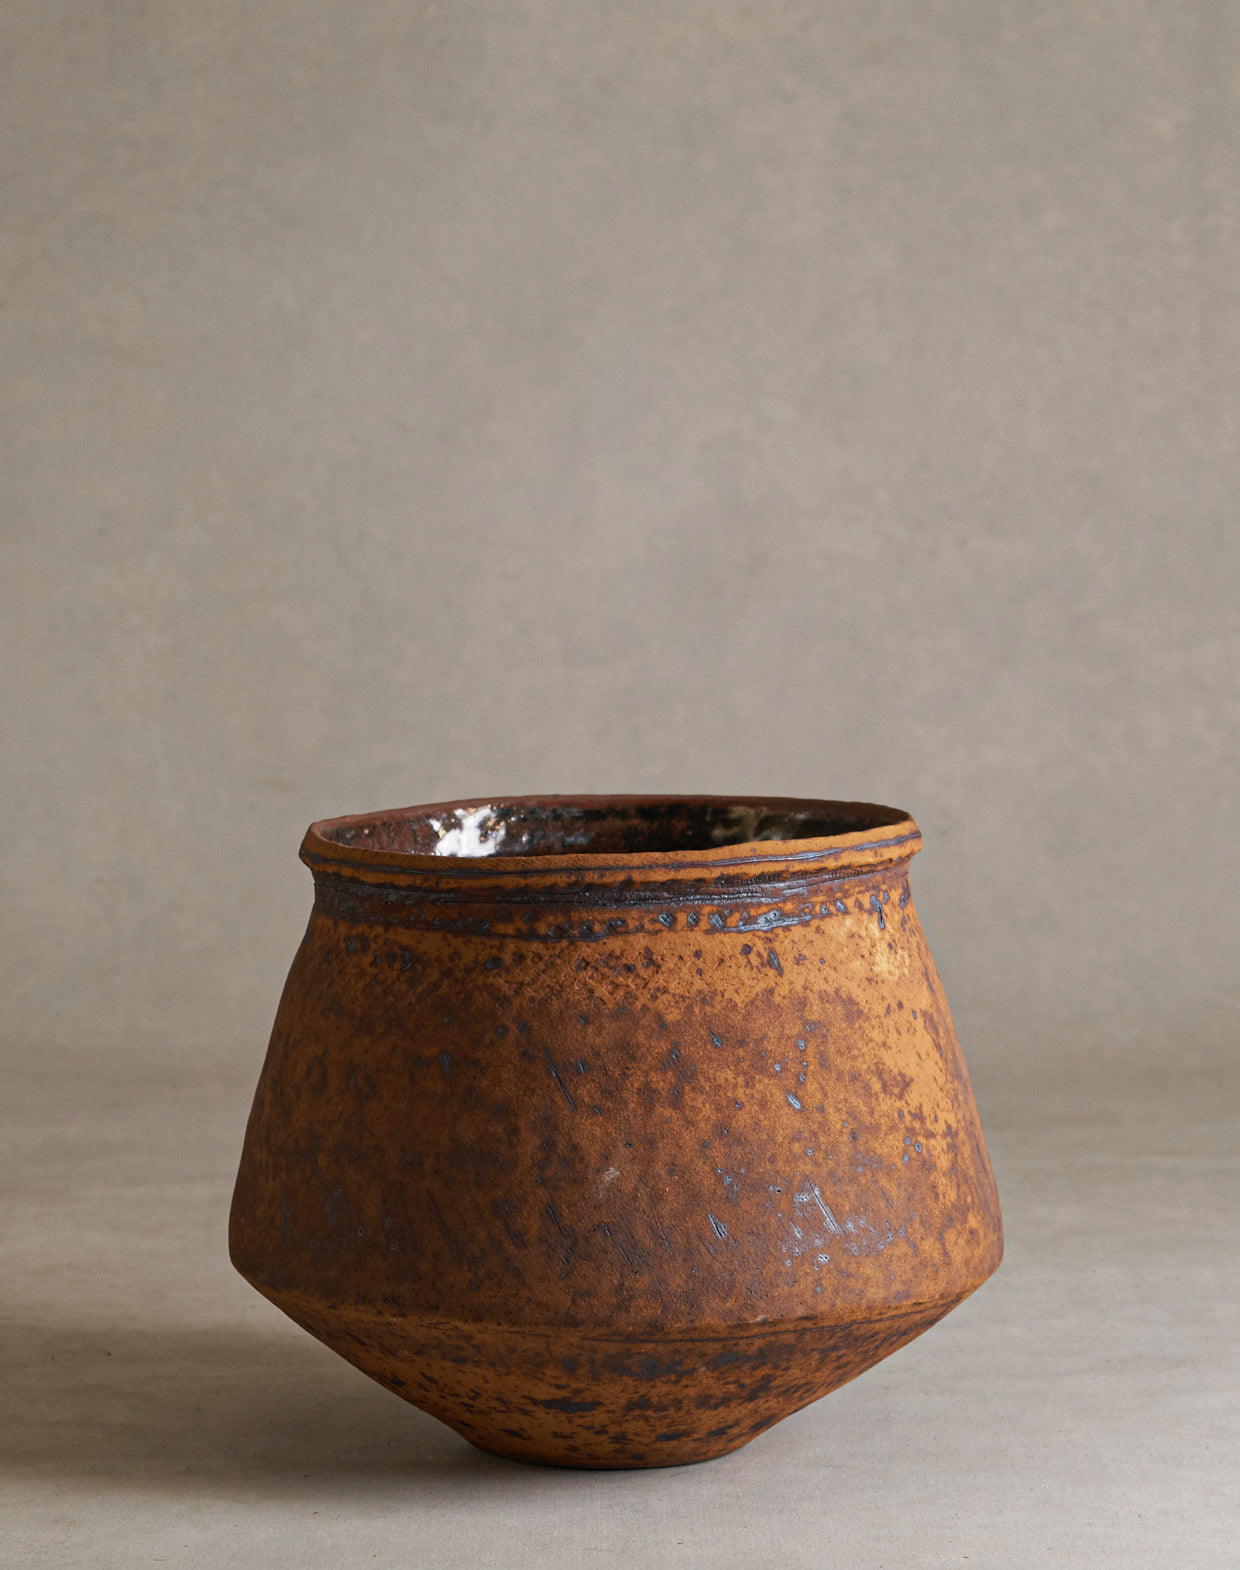 Rick Hintze Coiled Stoneware Vessel, "Untitled" No. 15